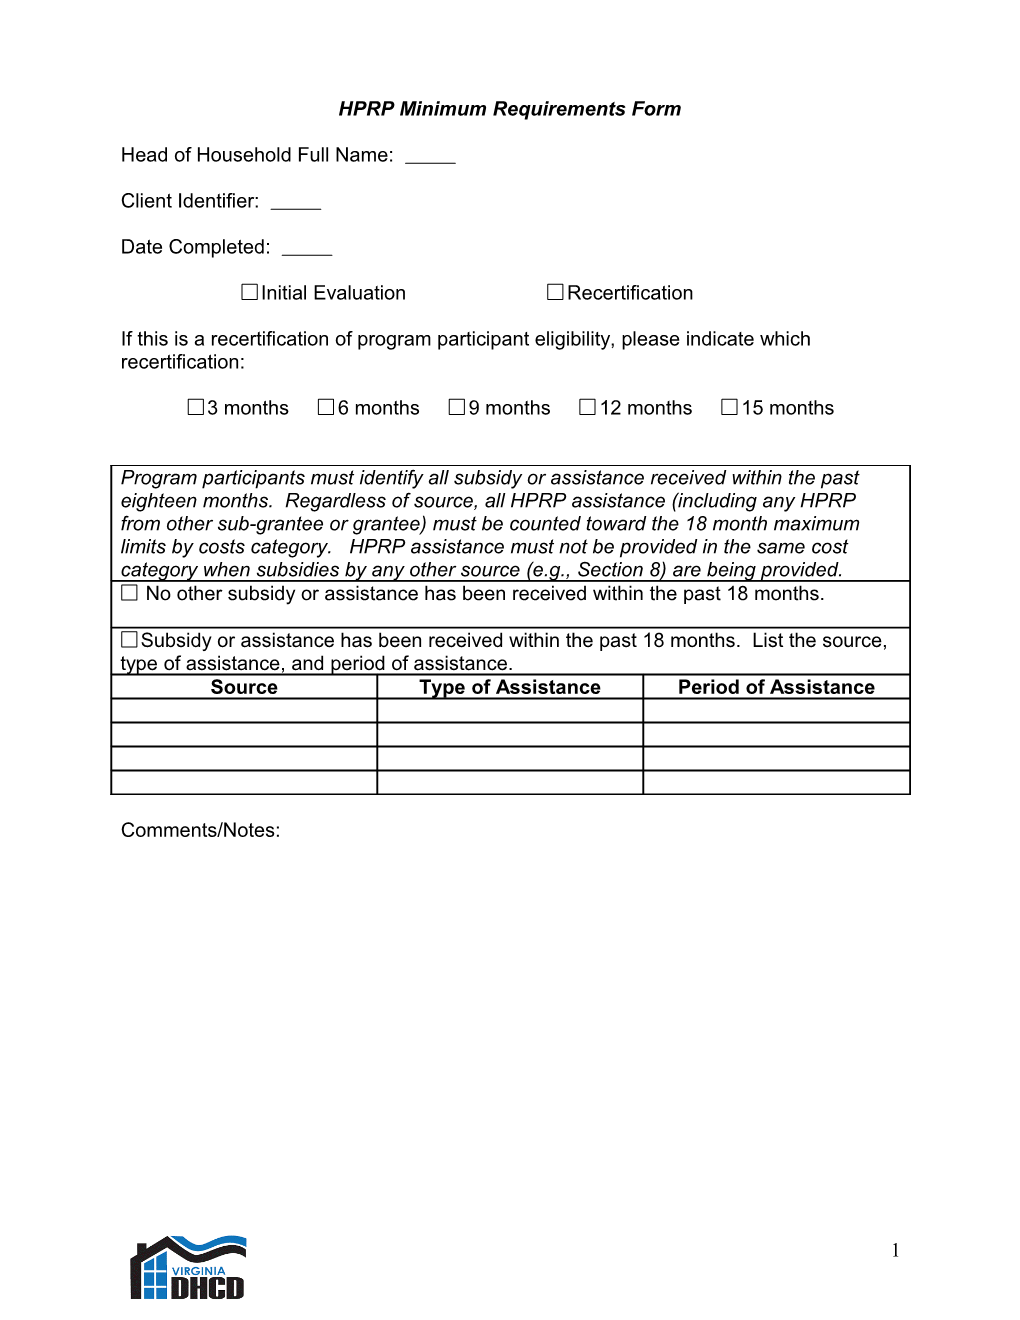 HPRP Minimum Requirements Form